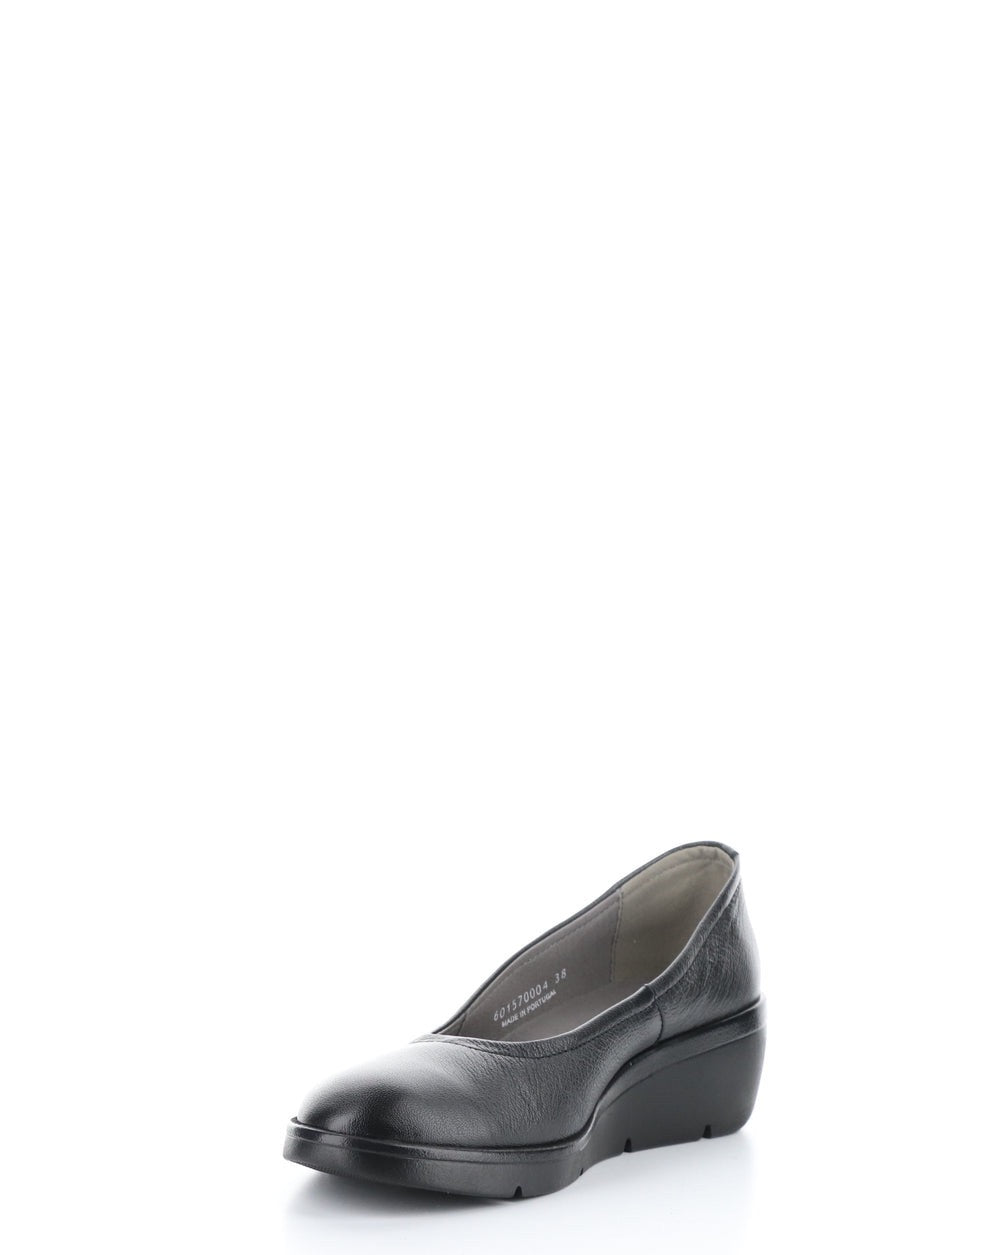 Fly London Women's NUMA570FLY Slip-On Shoes Black